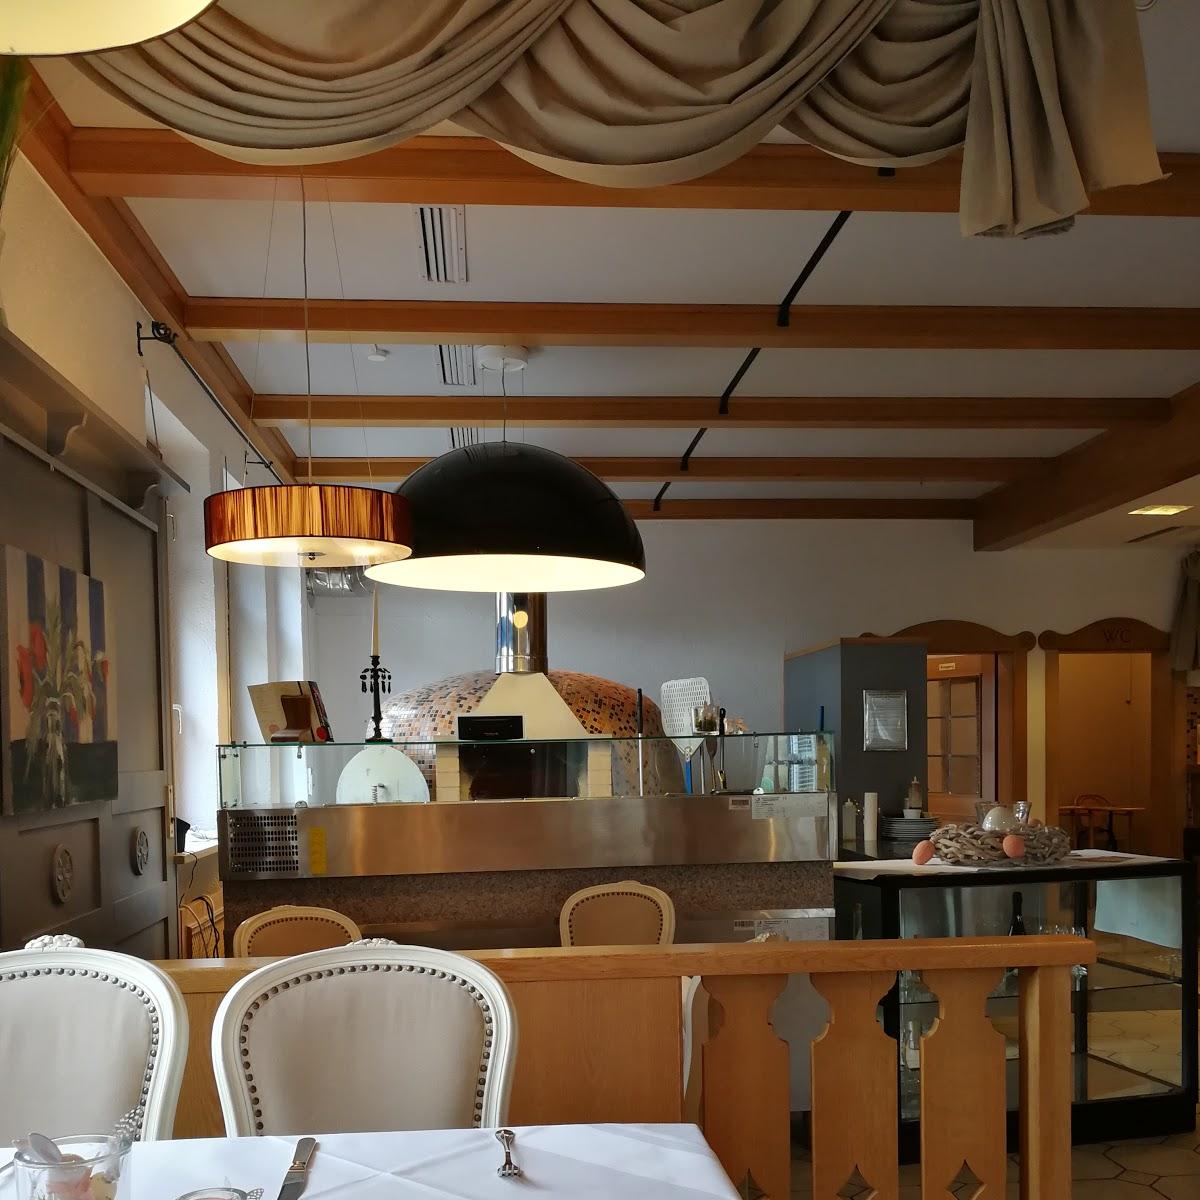 Restaurant "Ristorante peperoncino" in Kirchheim unter Teck